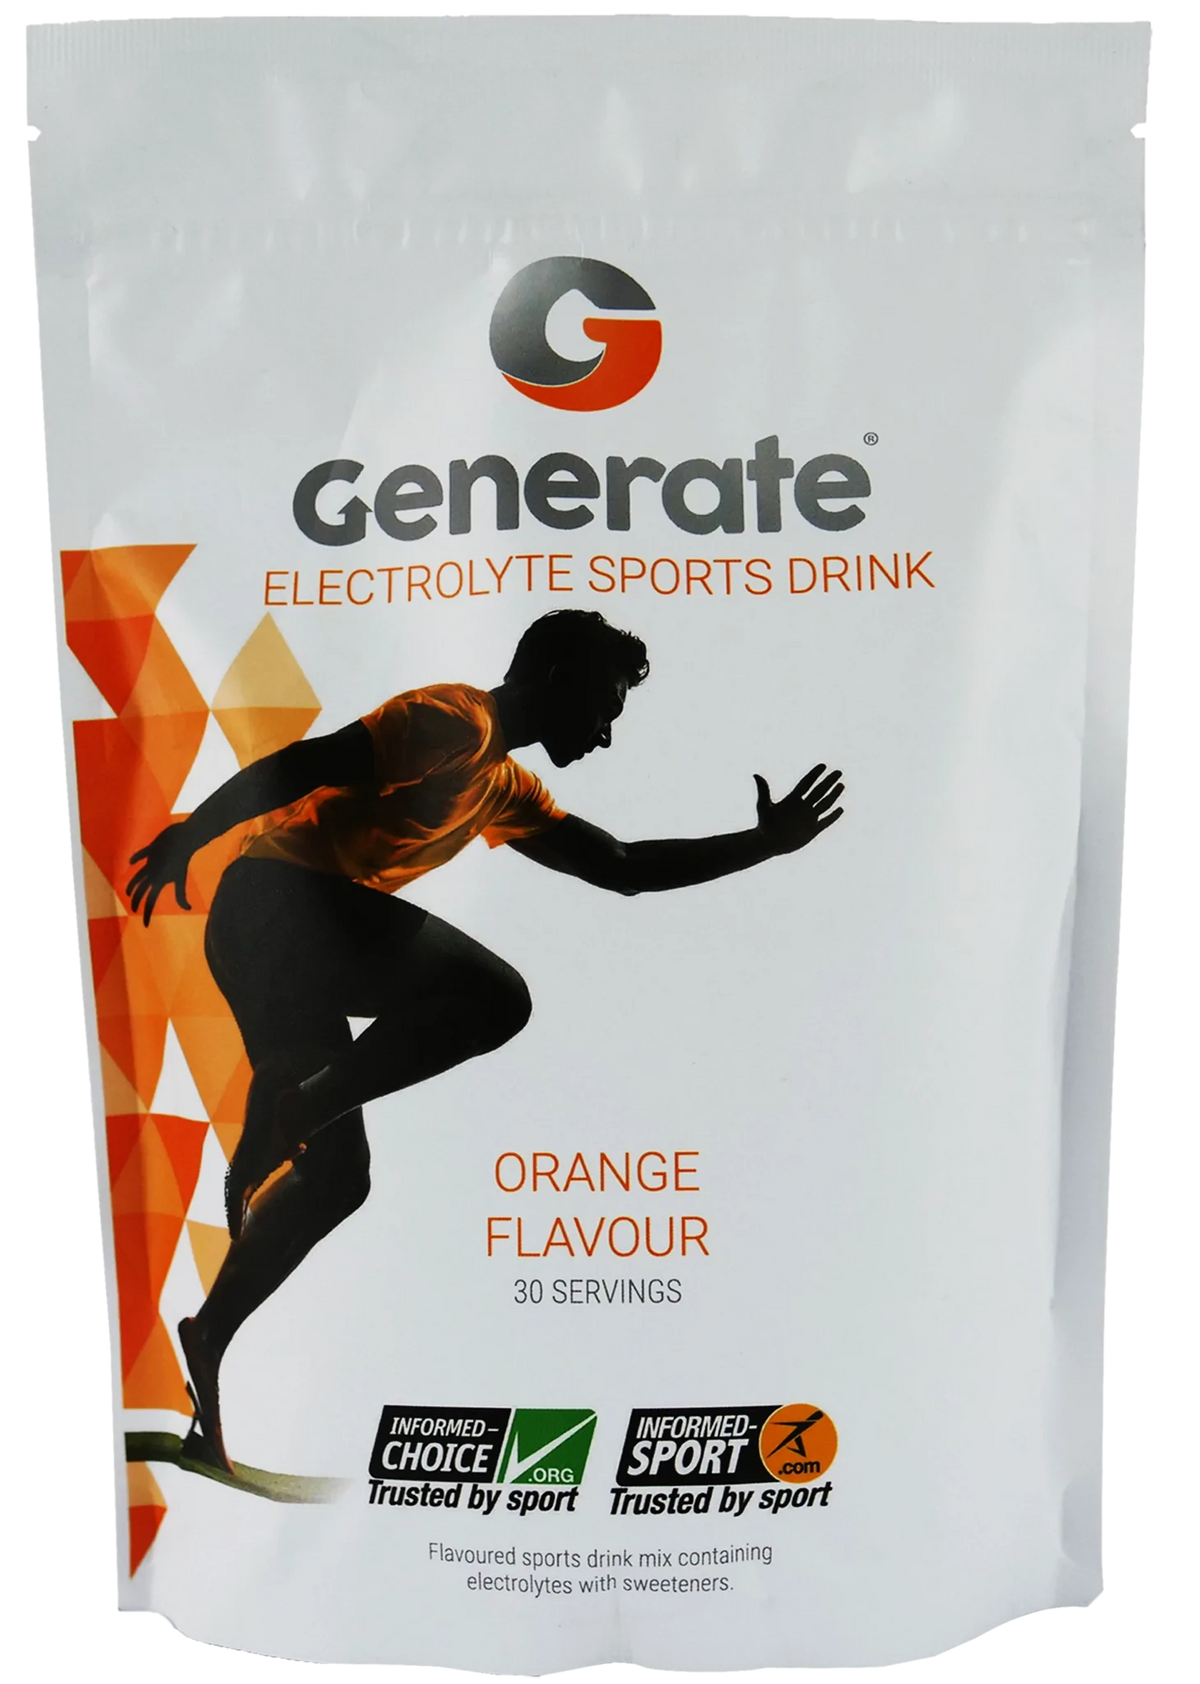 Generate electrolyte sports drink